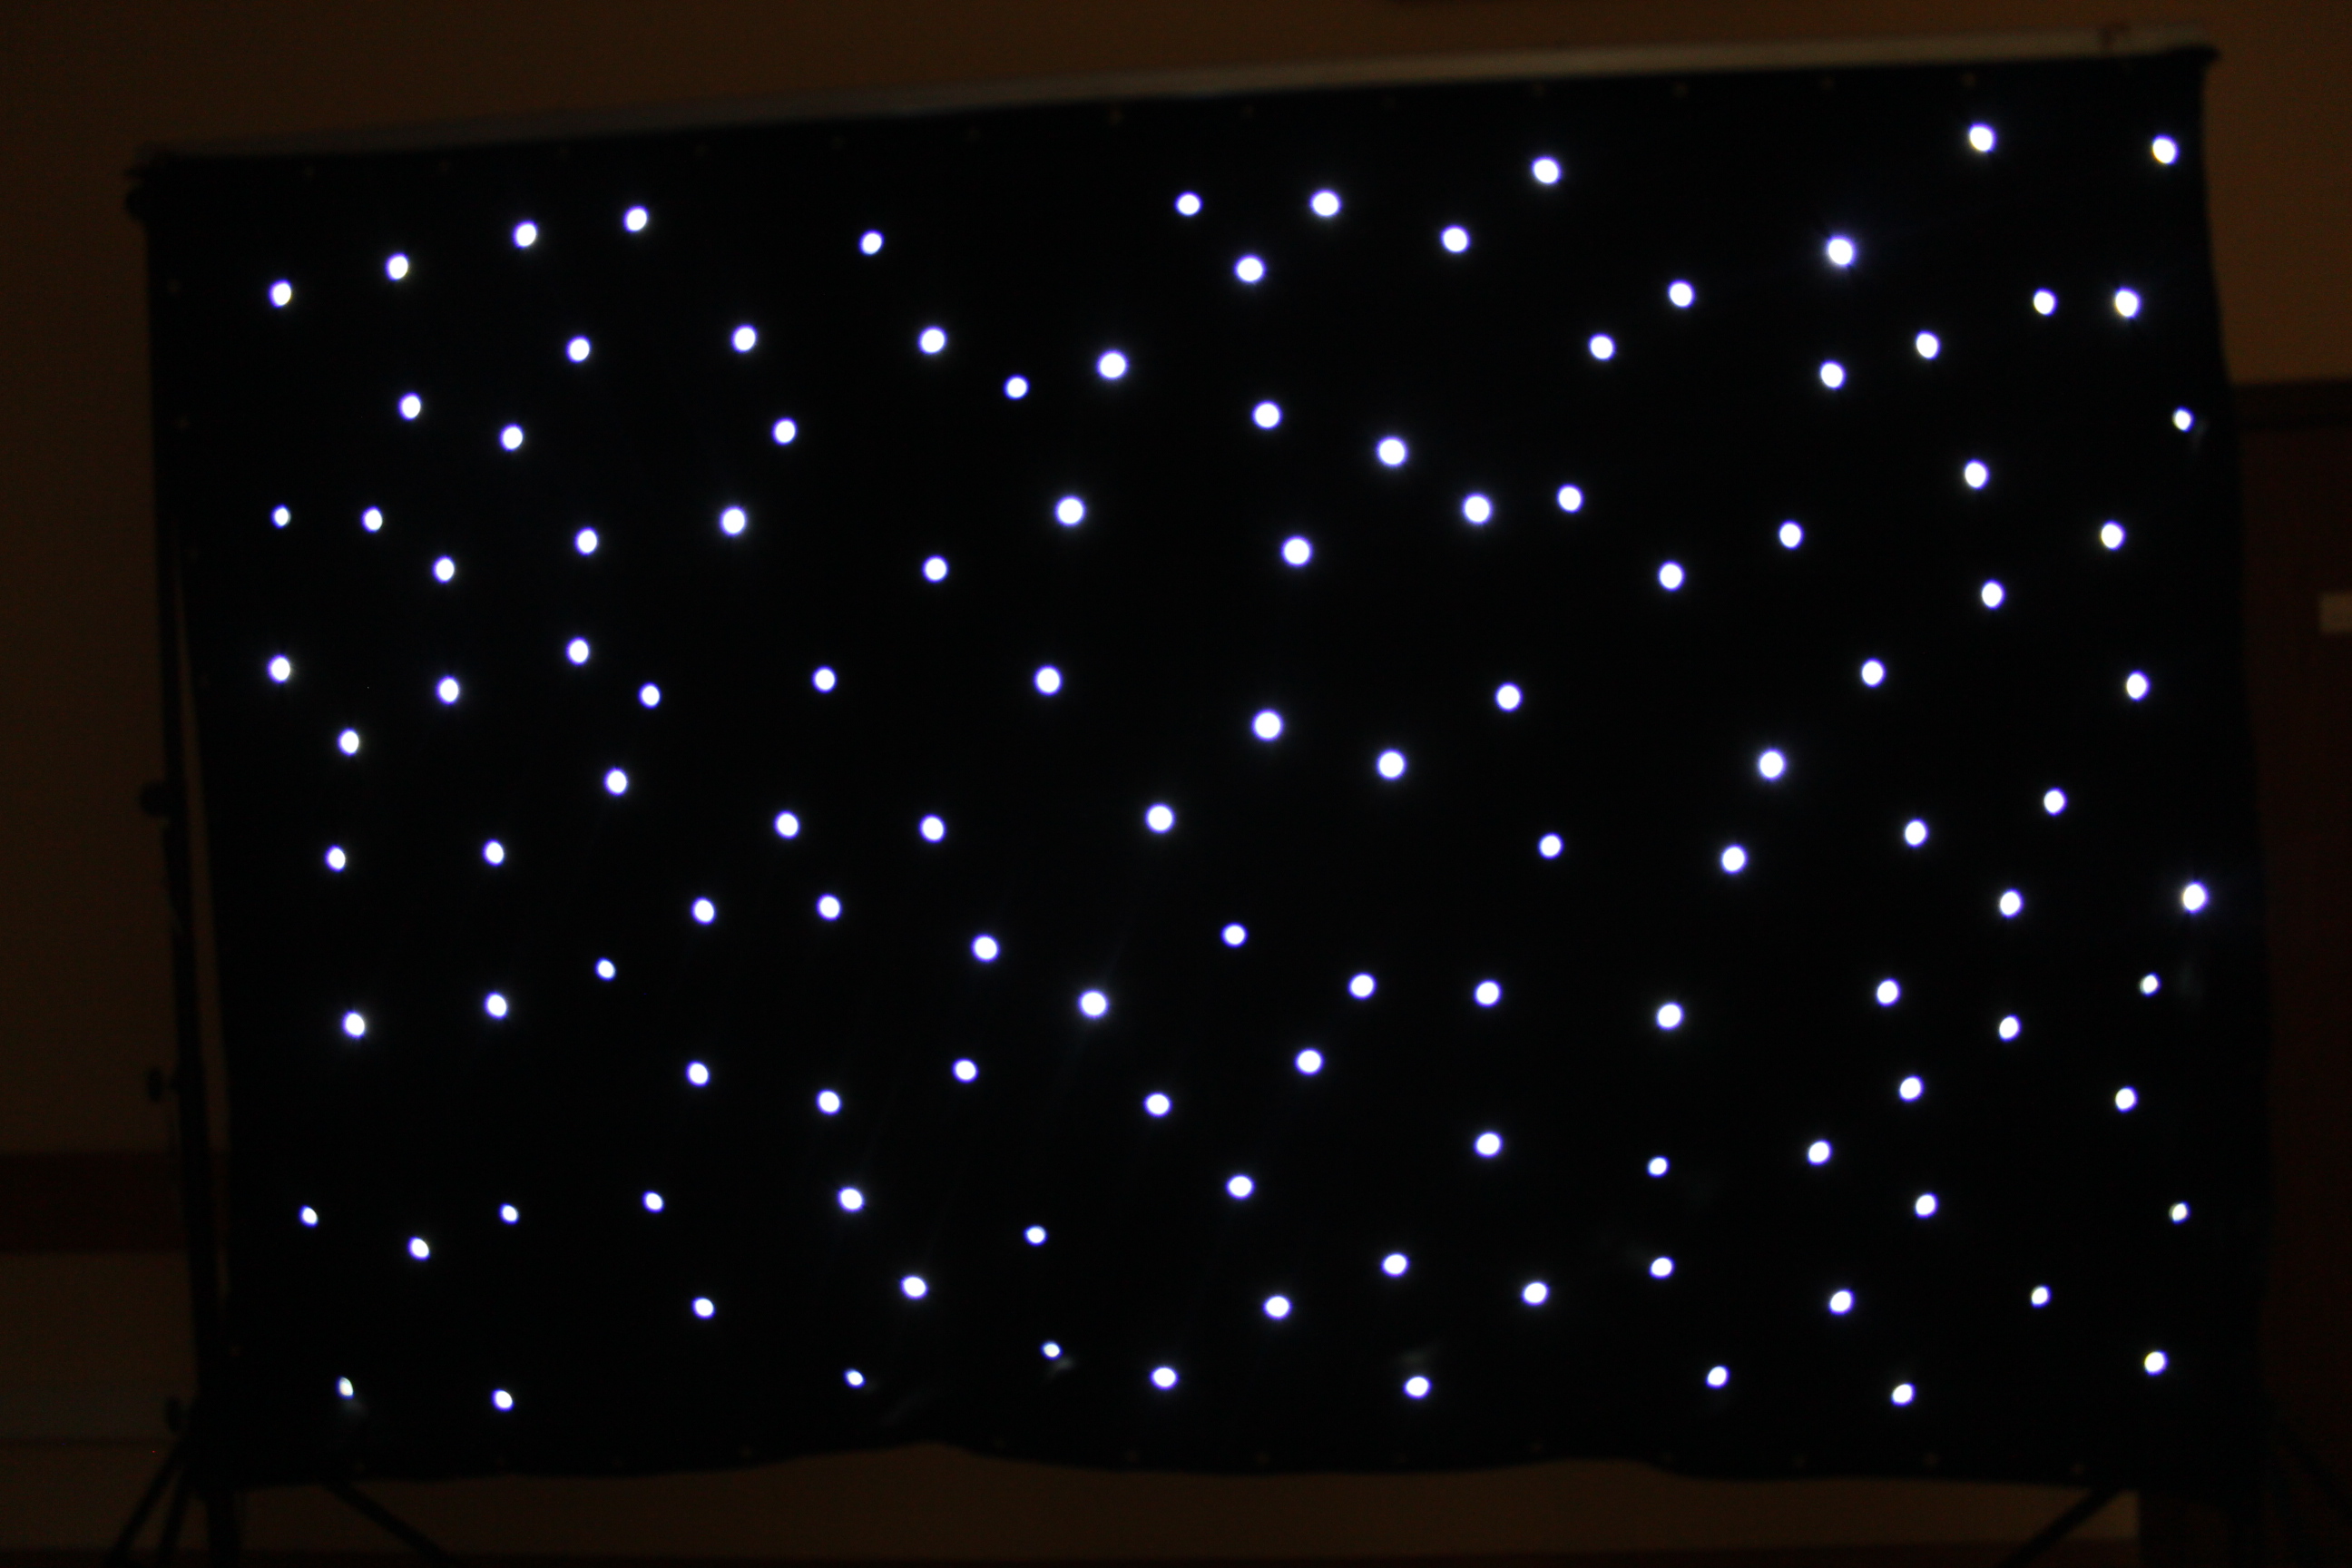 Proton Lighting PL LED Star Cloth Curtain LED занавес Звёздное небо, 2 х 3 м по цене 48 000 ₽